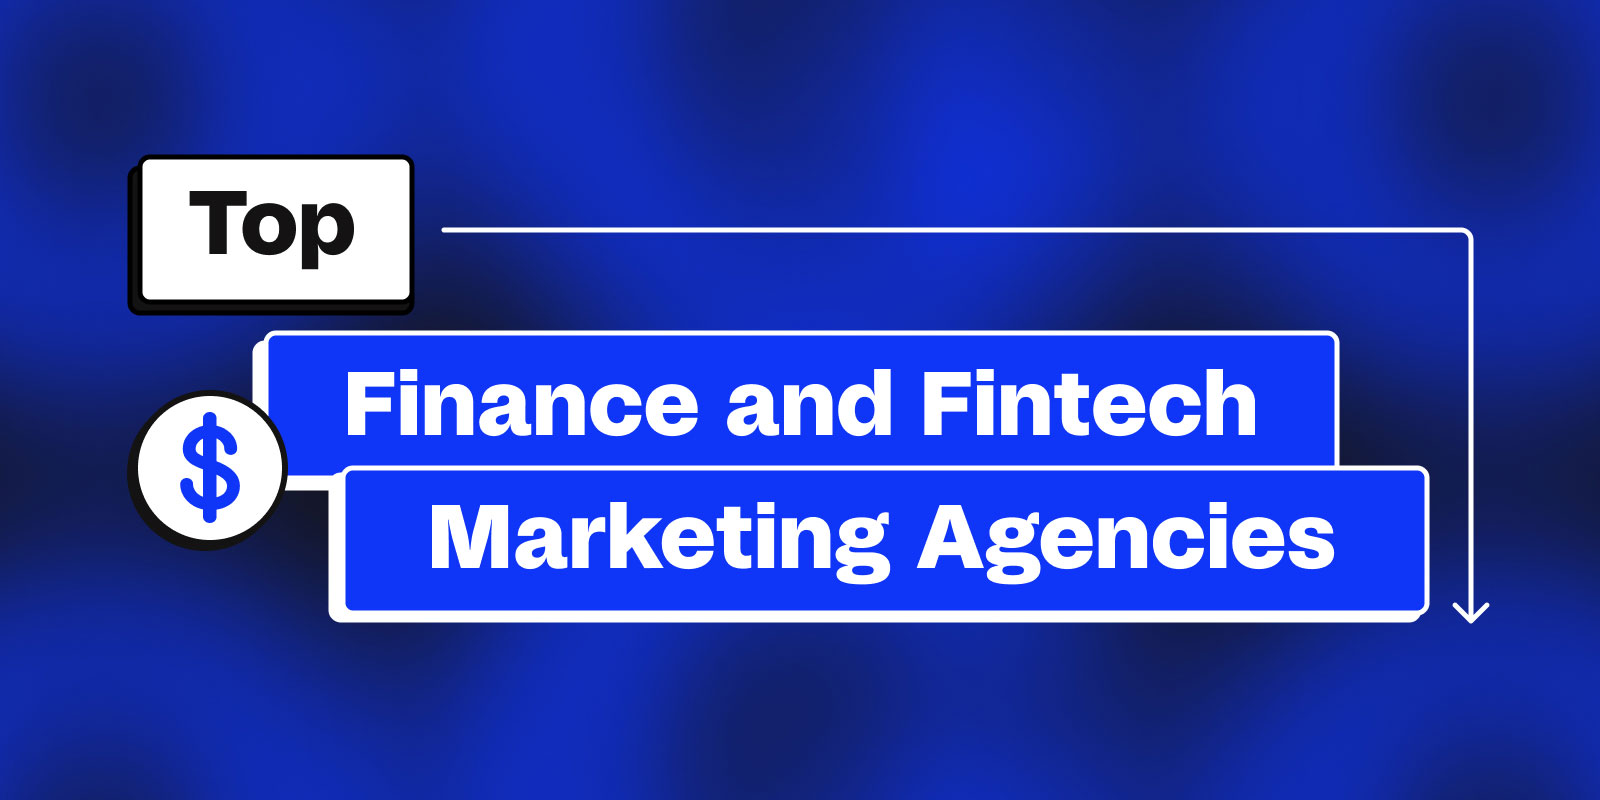 Top Finance and Fintech Marketing Agencies